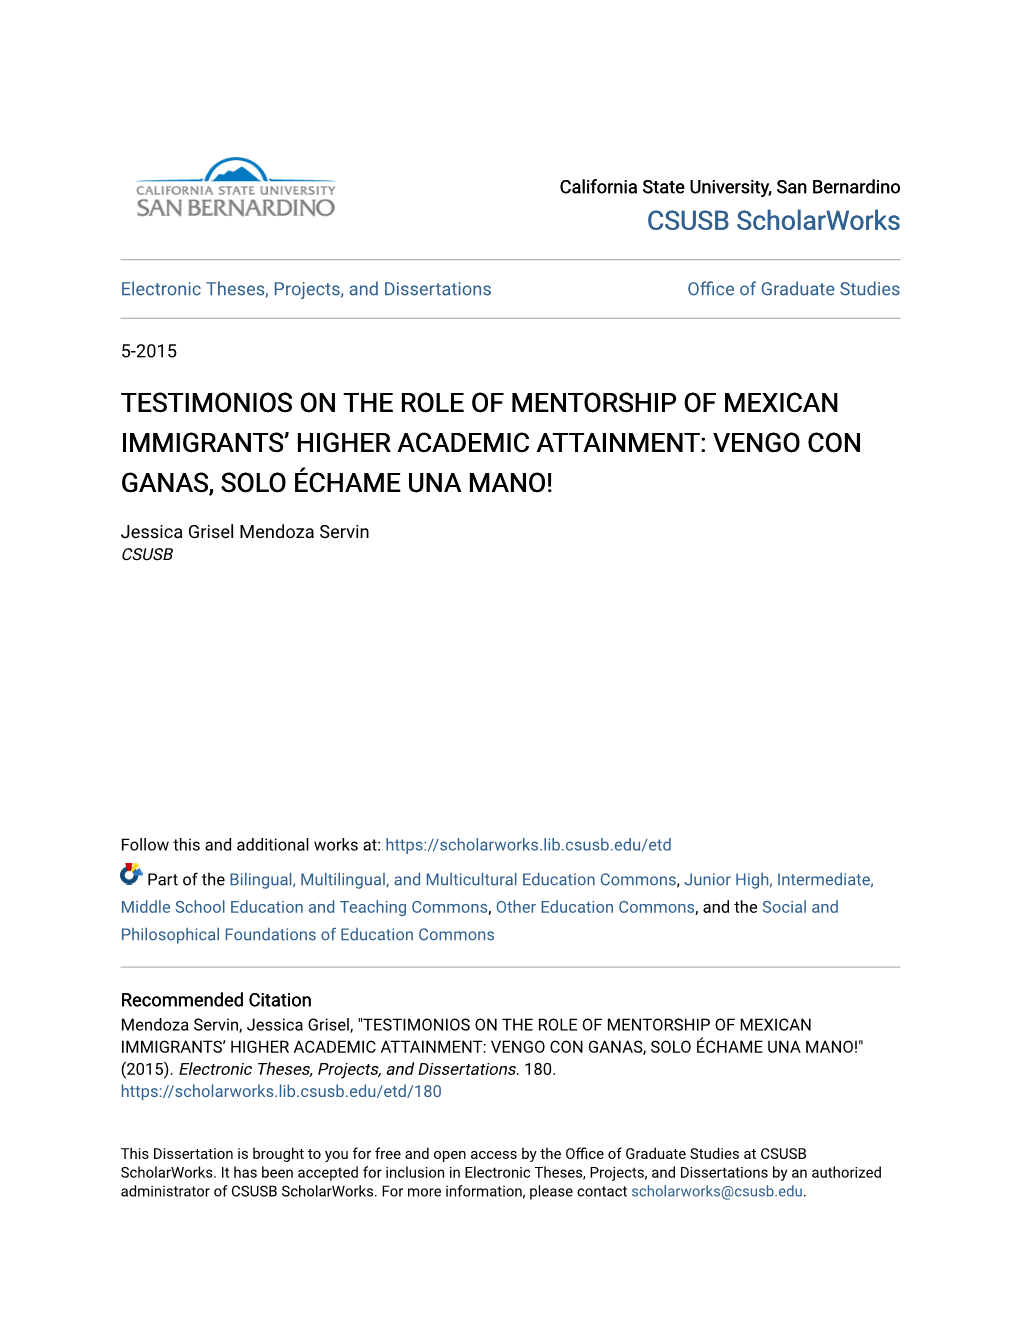 Testimonios on the Role of Mentorship of Mexican Immigrants’ Higher Academic Attainment: Vengo Con Ganas, Solo Échame Una Mano!